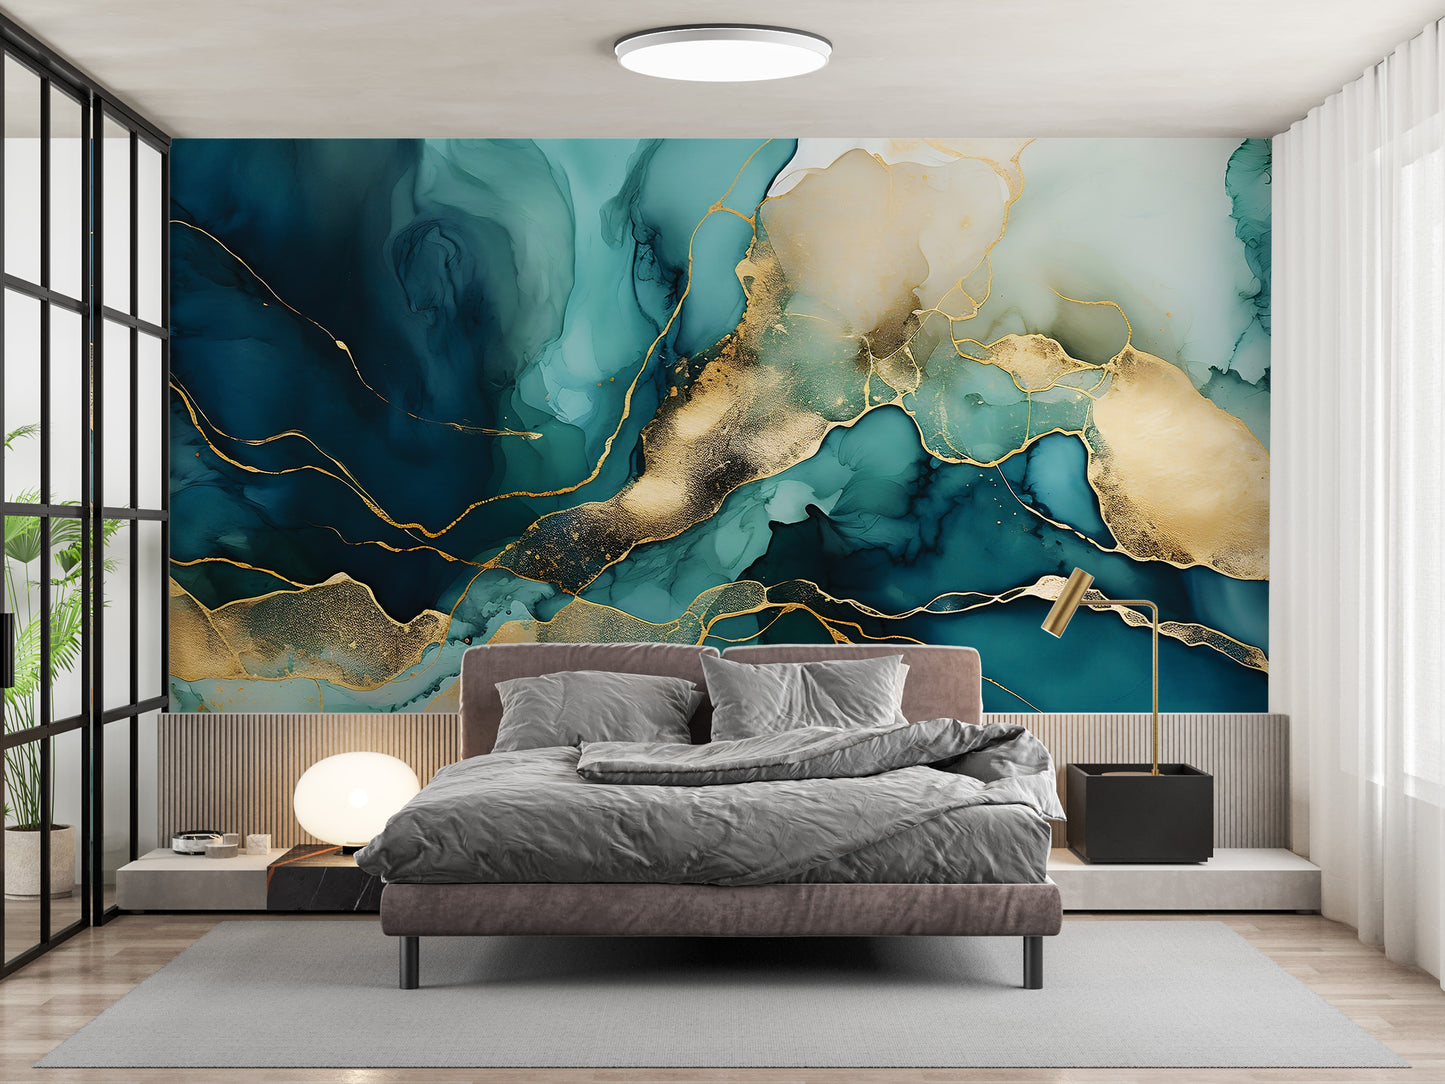 Fluid Artistic Wall Design - Self-Adhesive Wallpaper